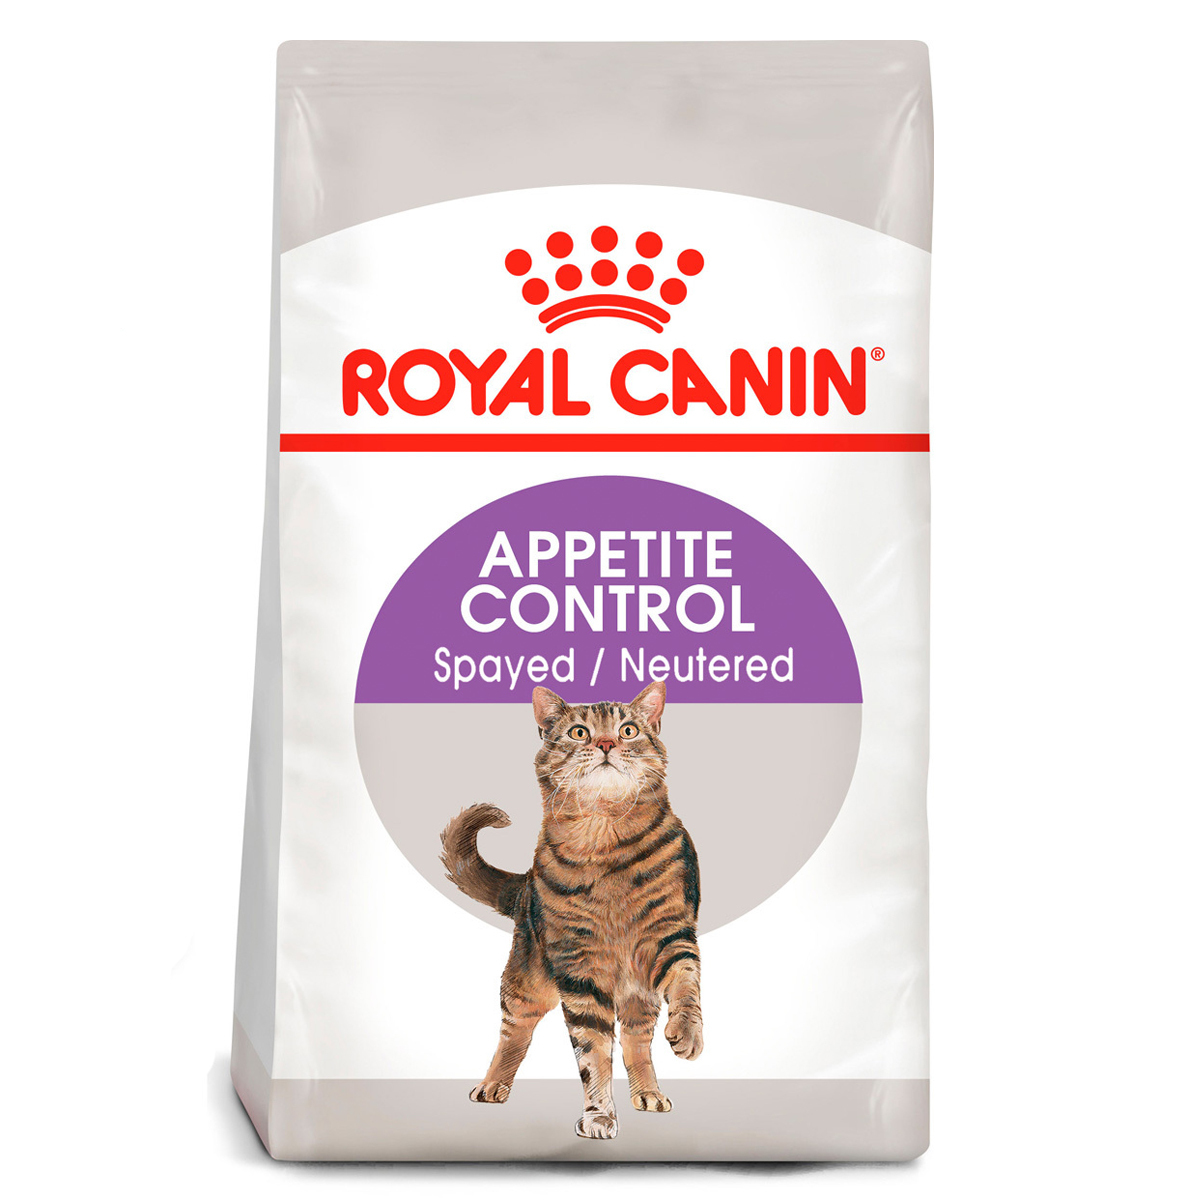 Royal Canin Alimento Seco Control de Apetito para Gato Adulto, 6.3 kg